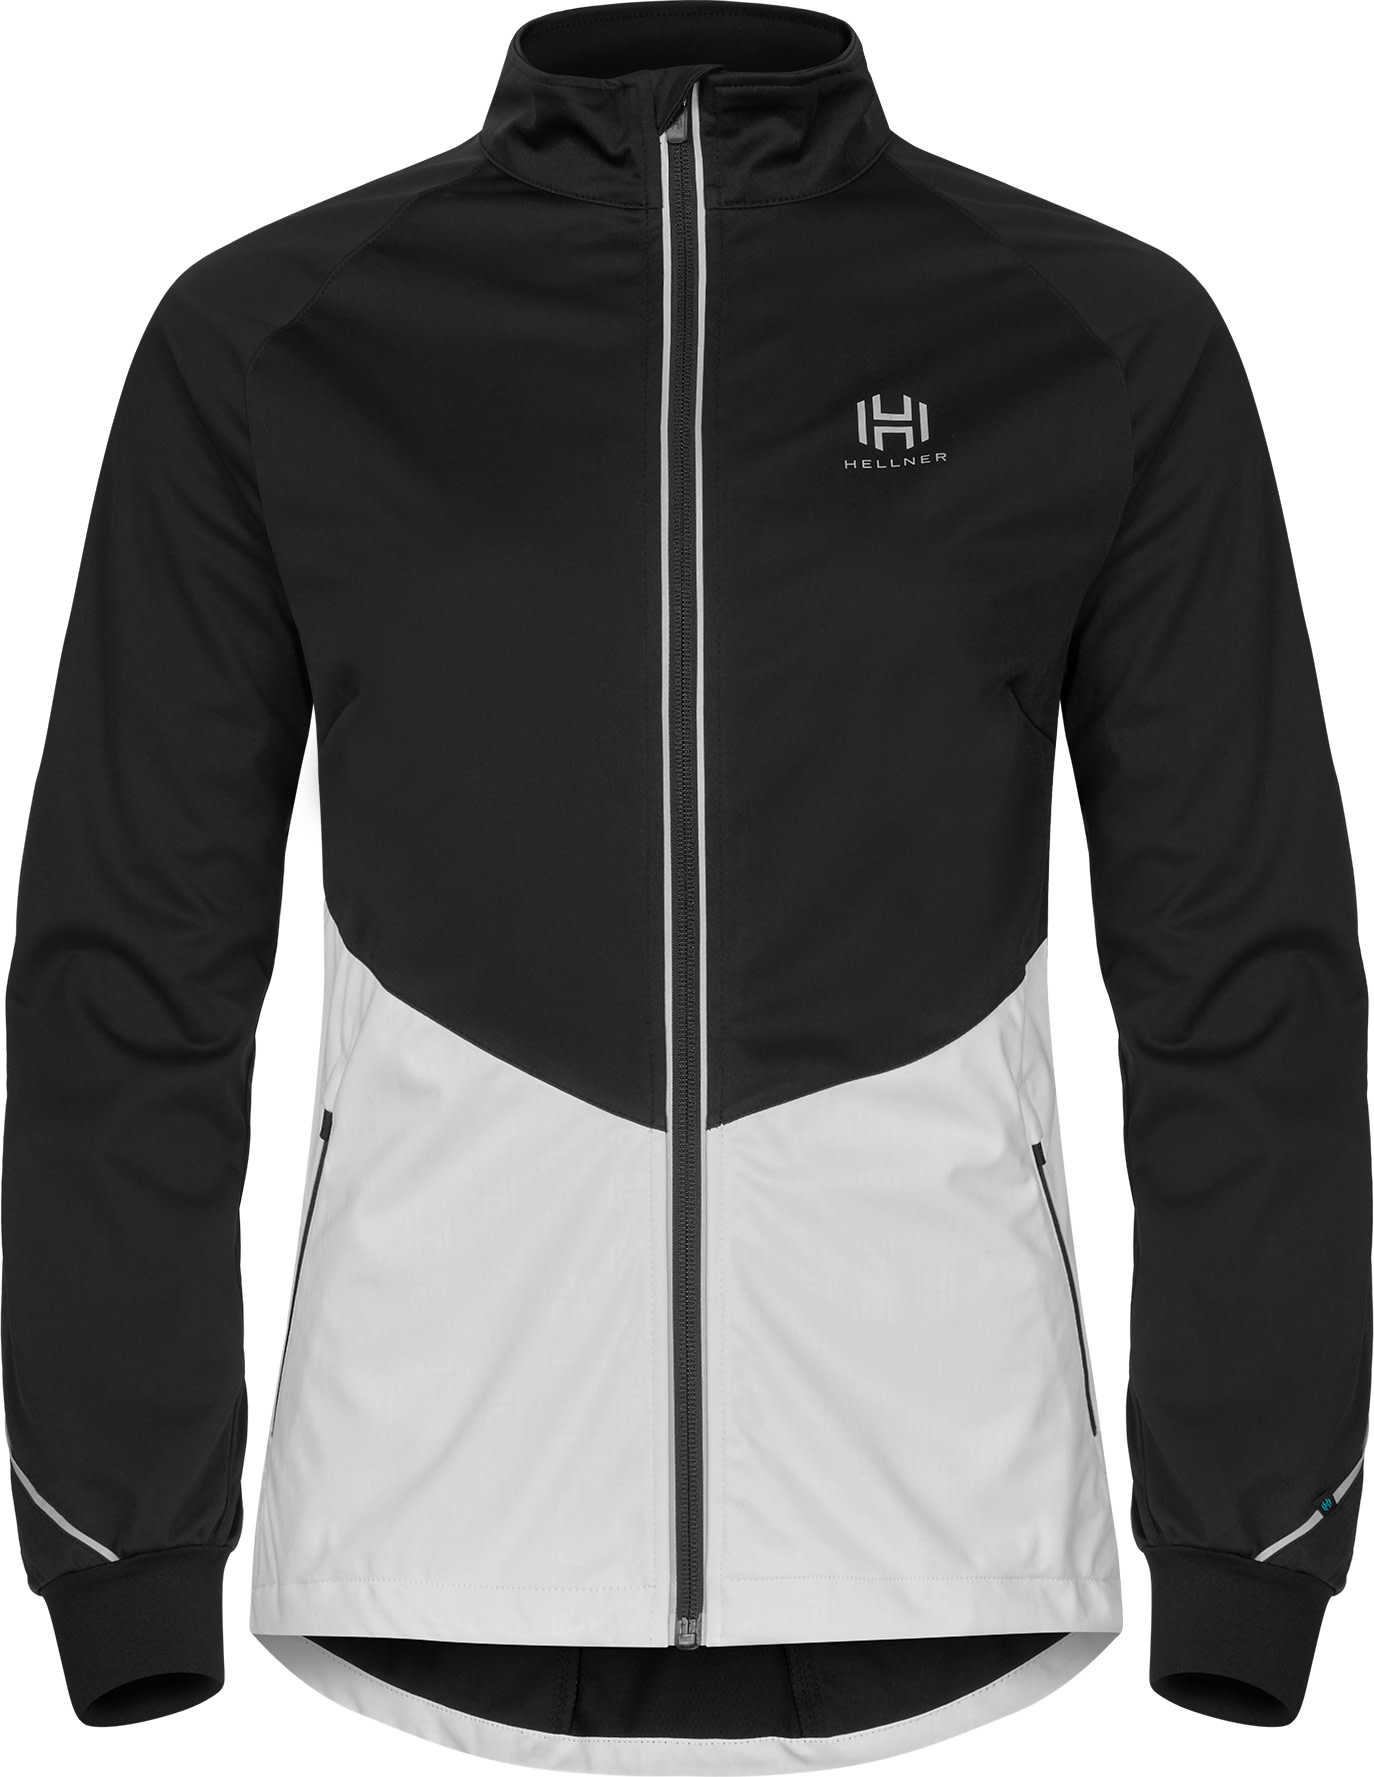 Hellner Women’s Suola XC Ski Jacket Black/White